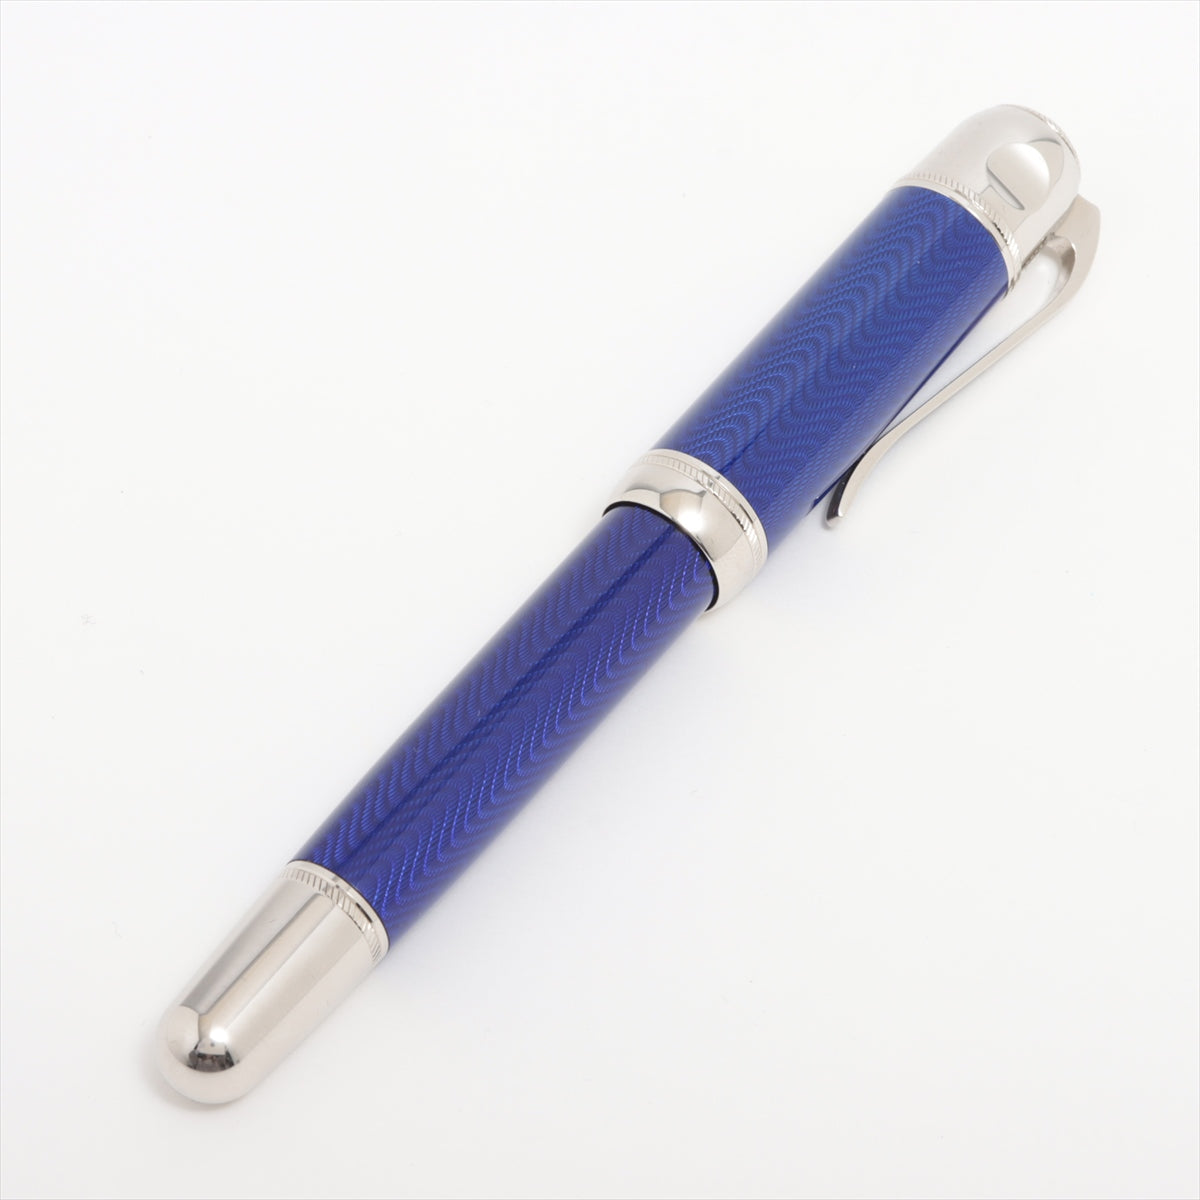 Montblanc Fountain pen GP x resin Blue Writer Series Jules Verne 200313533/18500 Pen nib 18K